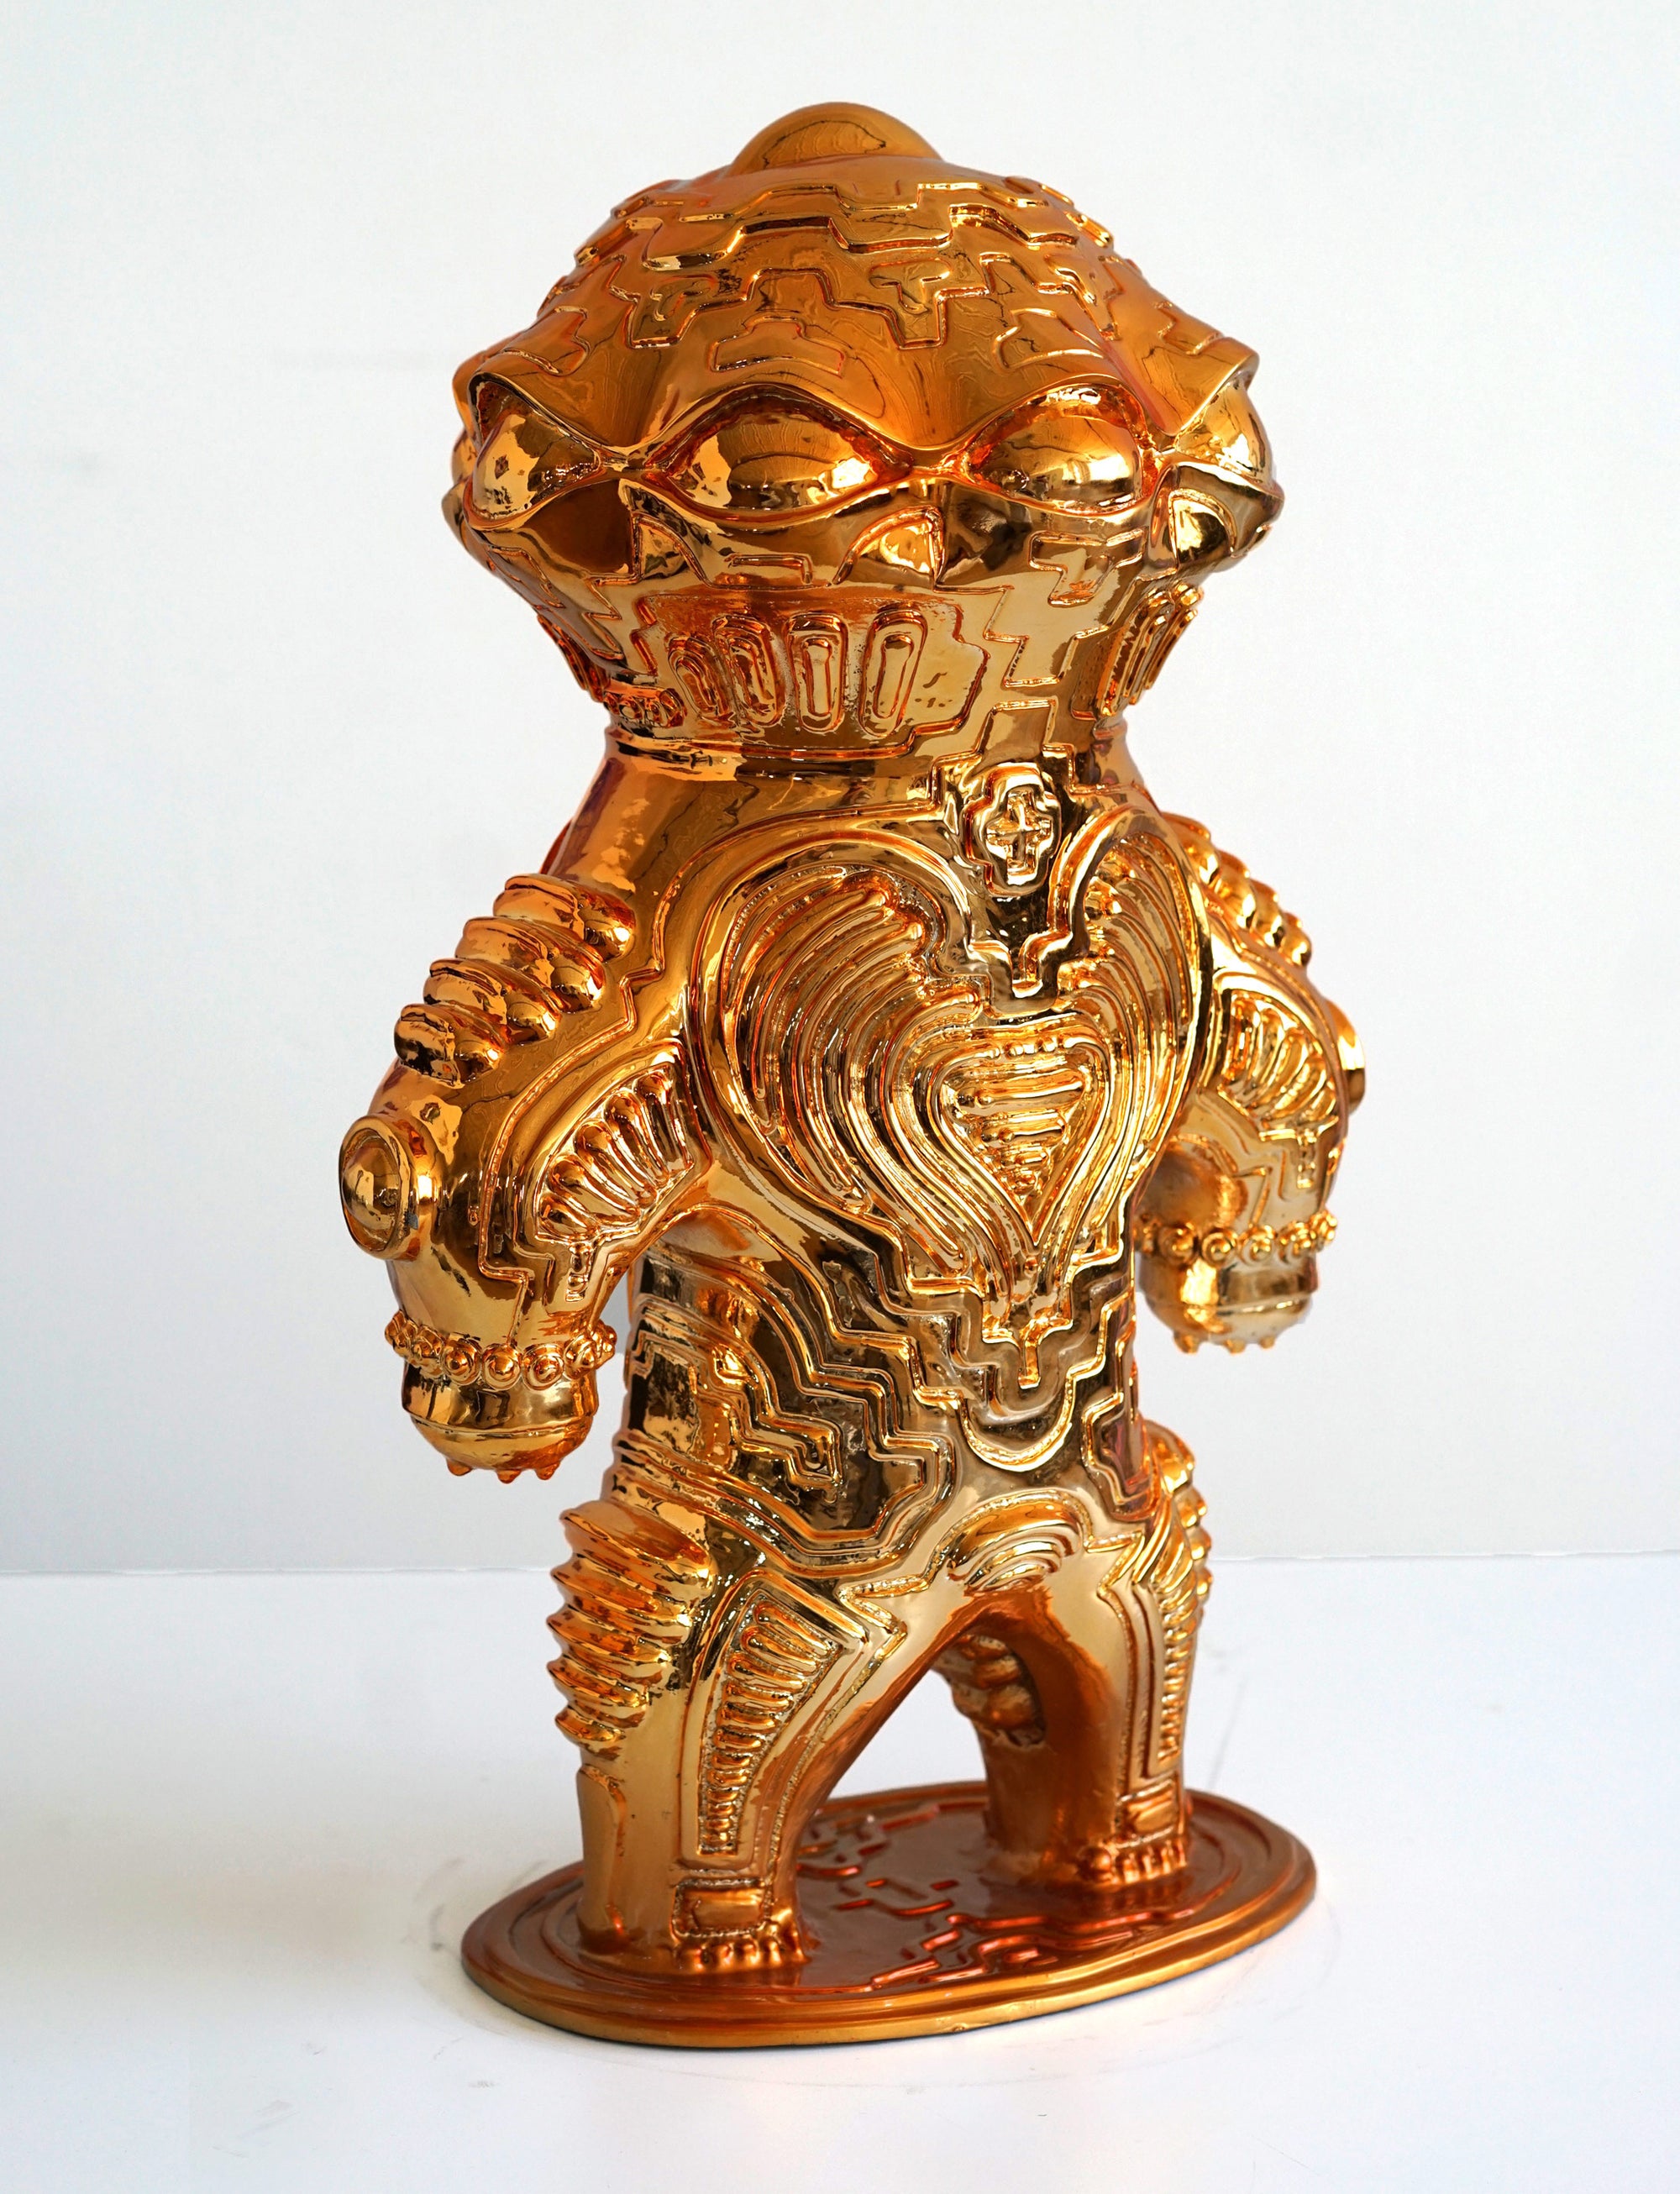 Dogu Gold Chrome Plated Sculpture by Ben Ridgway